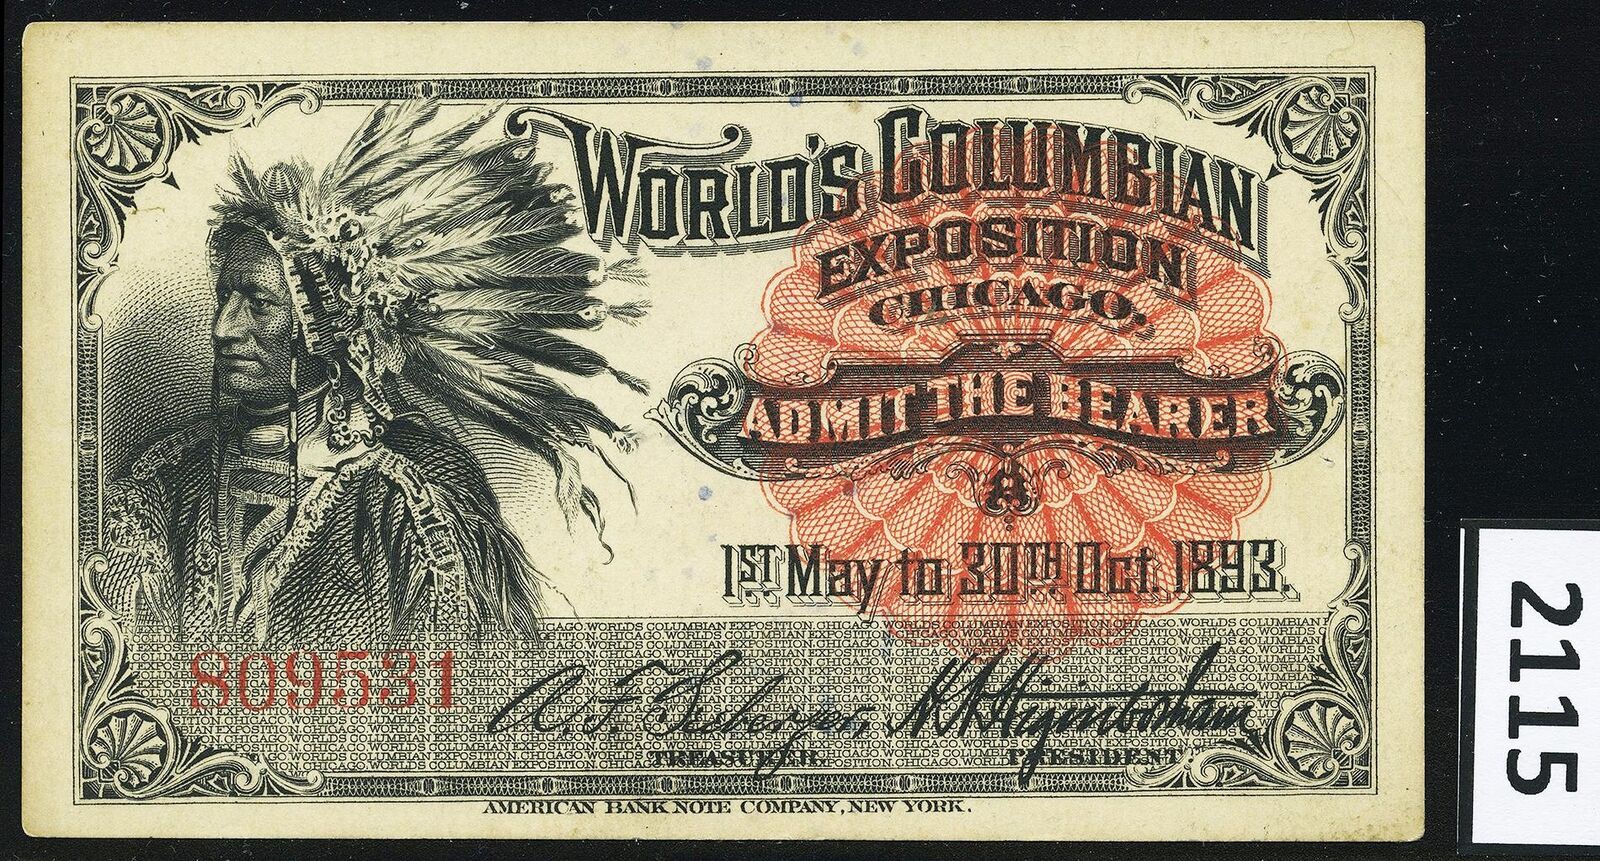 Dealer Dave Columbian Exposition 1893, INDIAN PORTRAIT TICKET, EXCELLENT(2115)